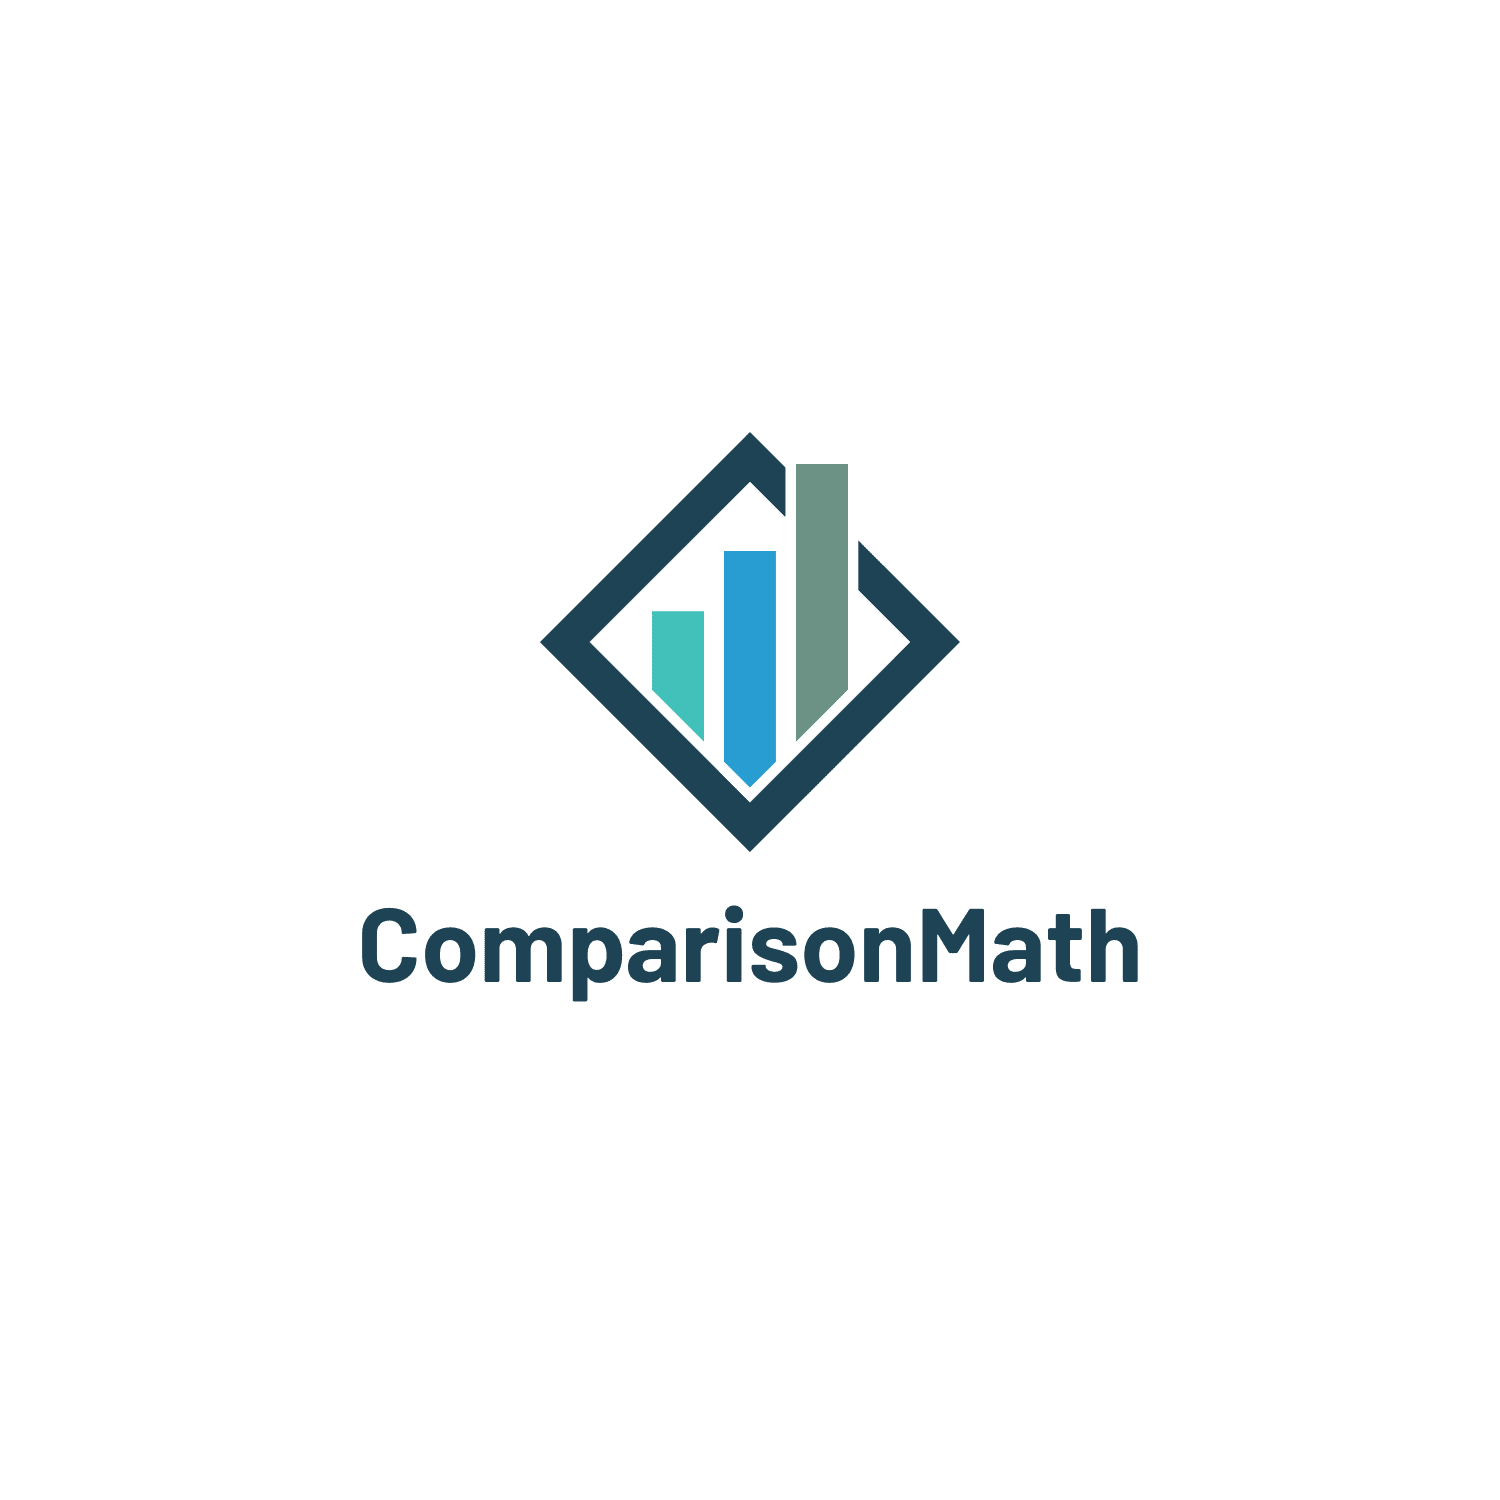 ComparisonMath